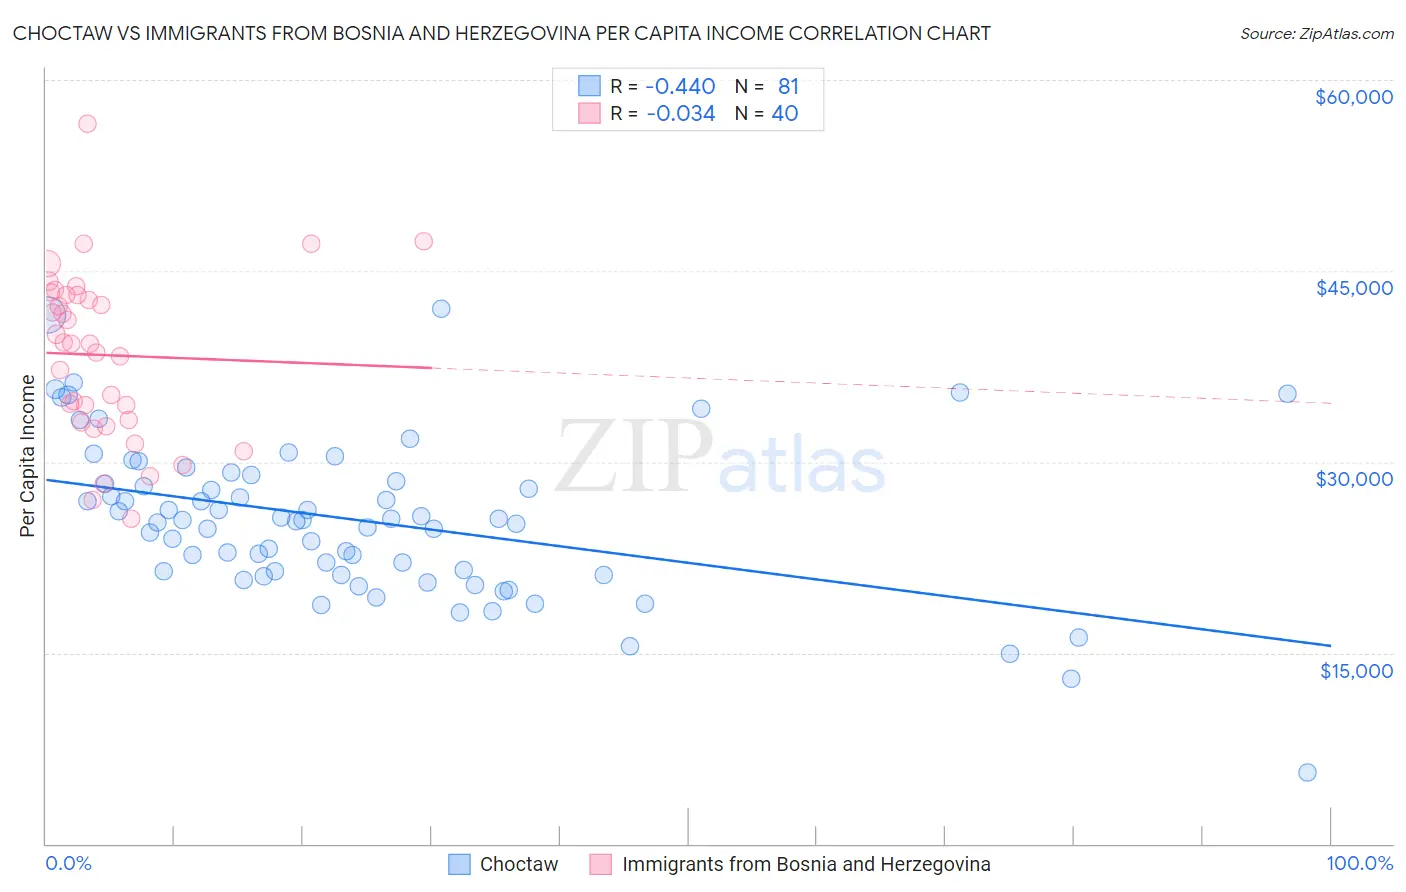 Choctaw vs Immigrants from Bosnia and Herzegovina Per Capita Income